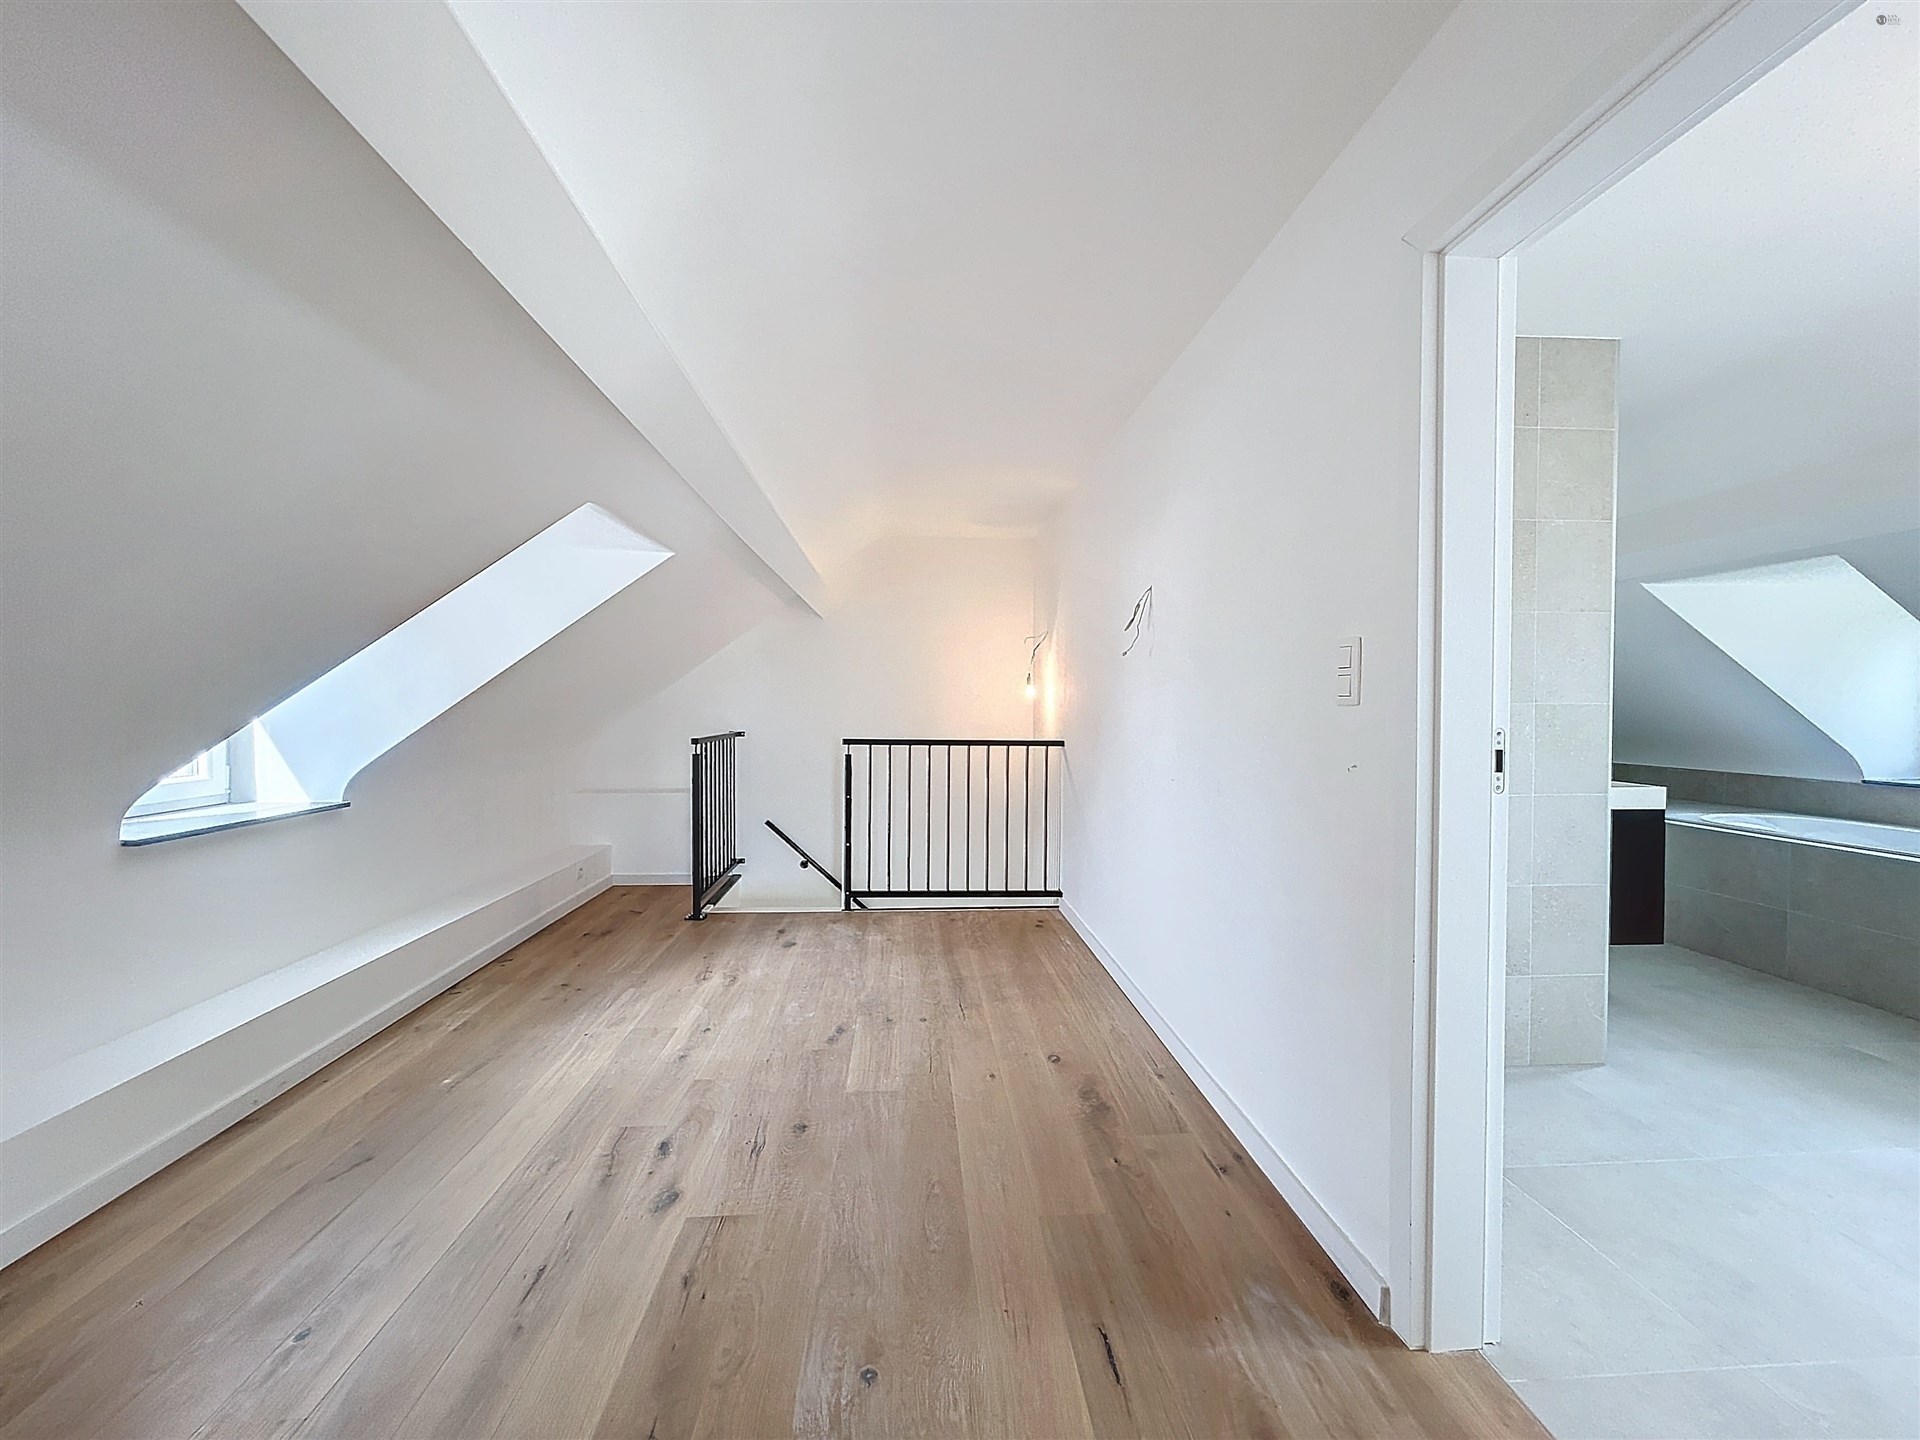 Prachtige energiezuinige villa in Belsele met 4 slaapkamers en 2 badkamers op perceel van 1239m² foto 15